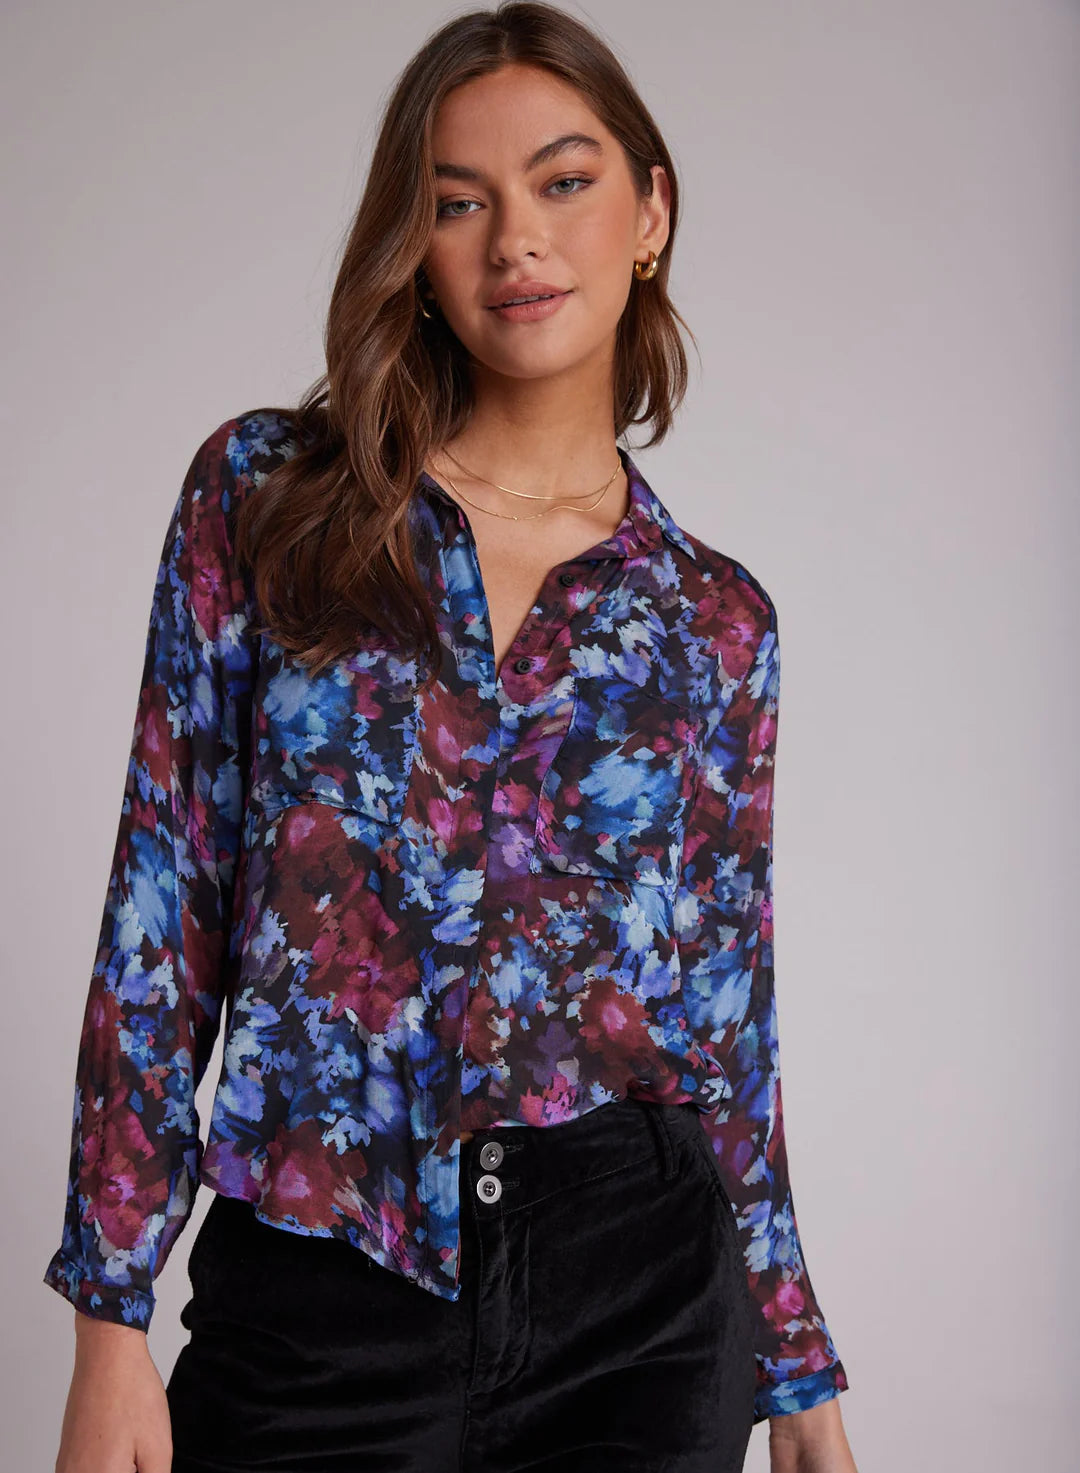 Full Button Down Shirt - Midnight Bloom Print